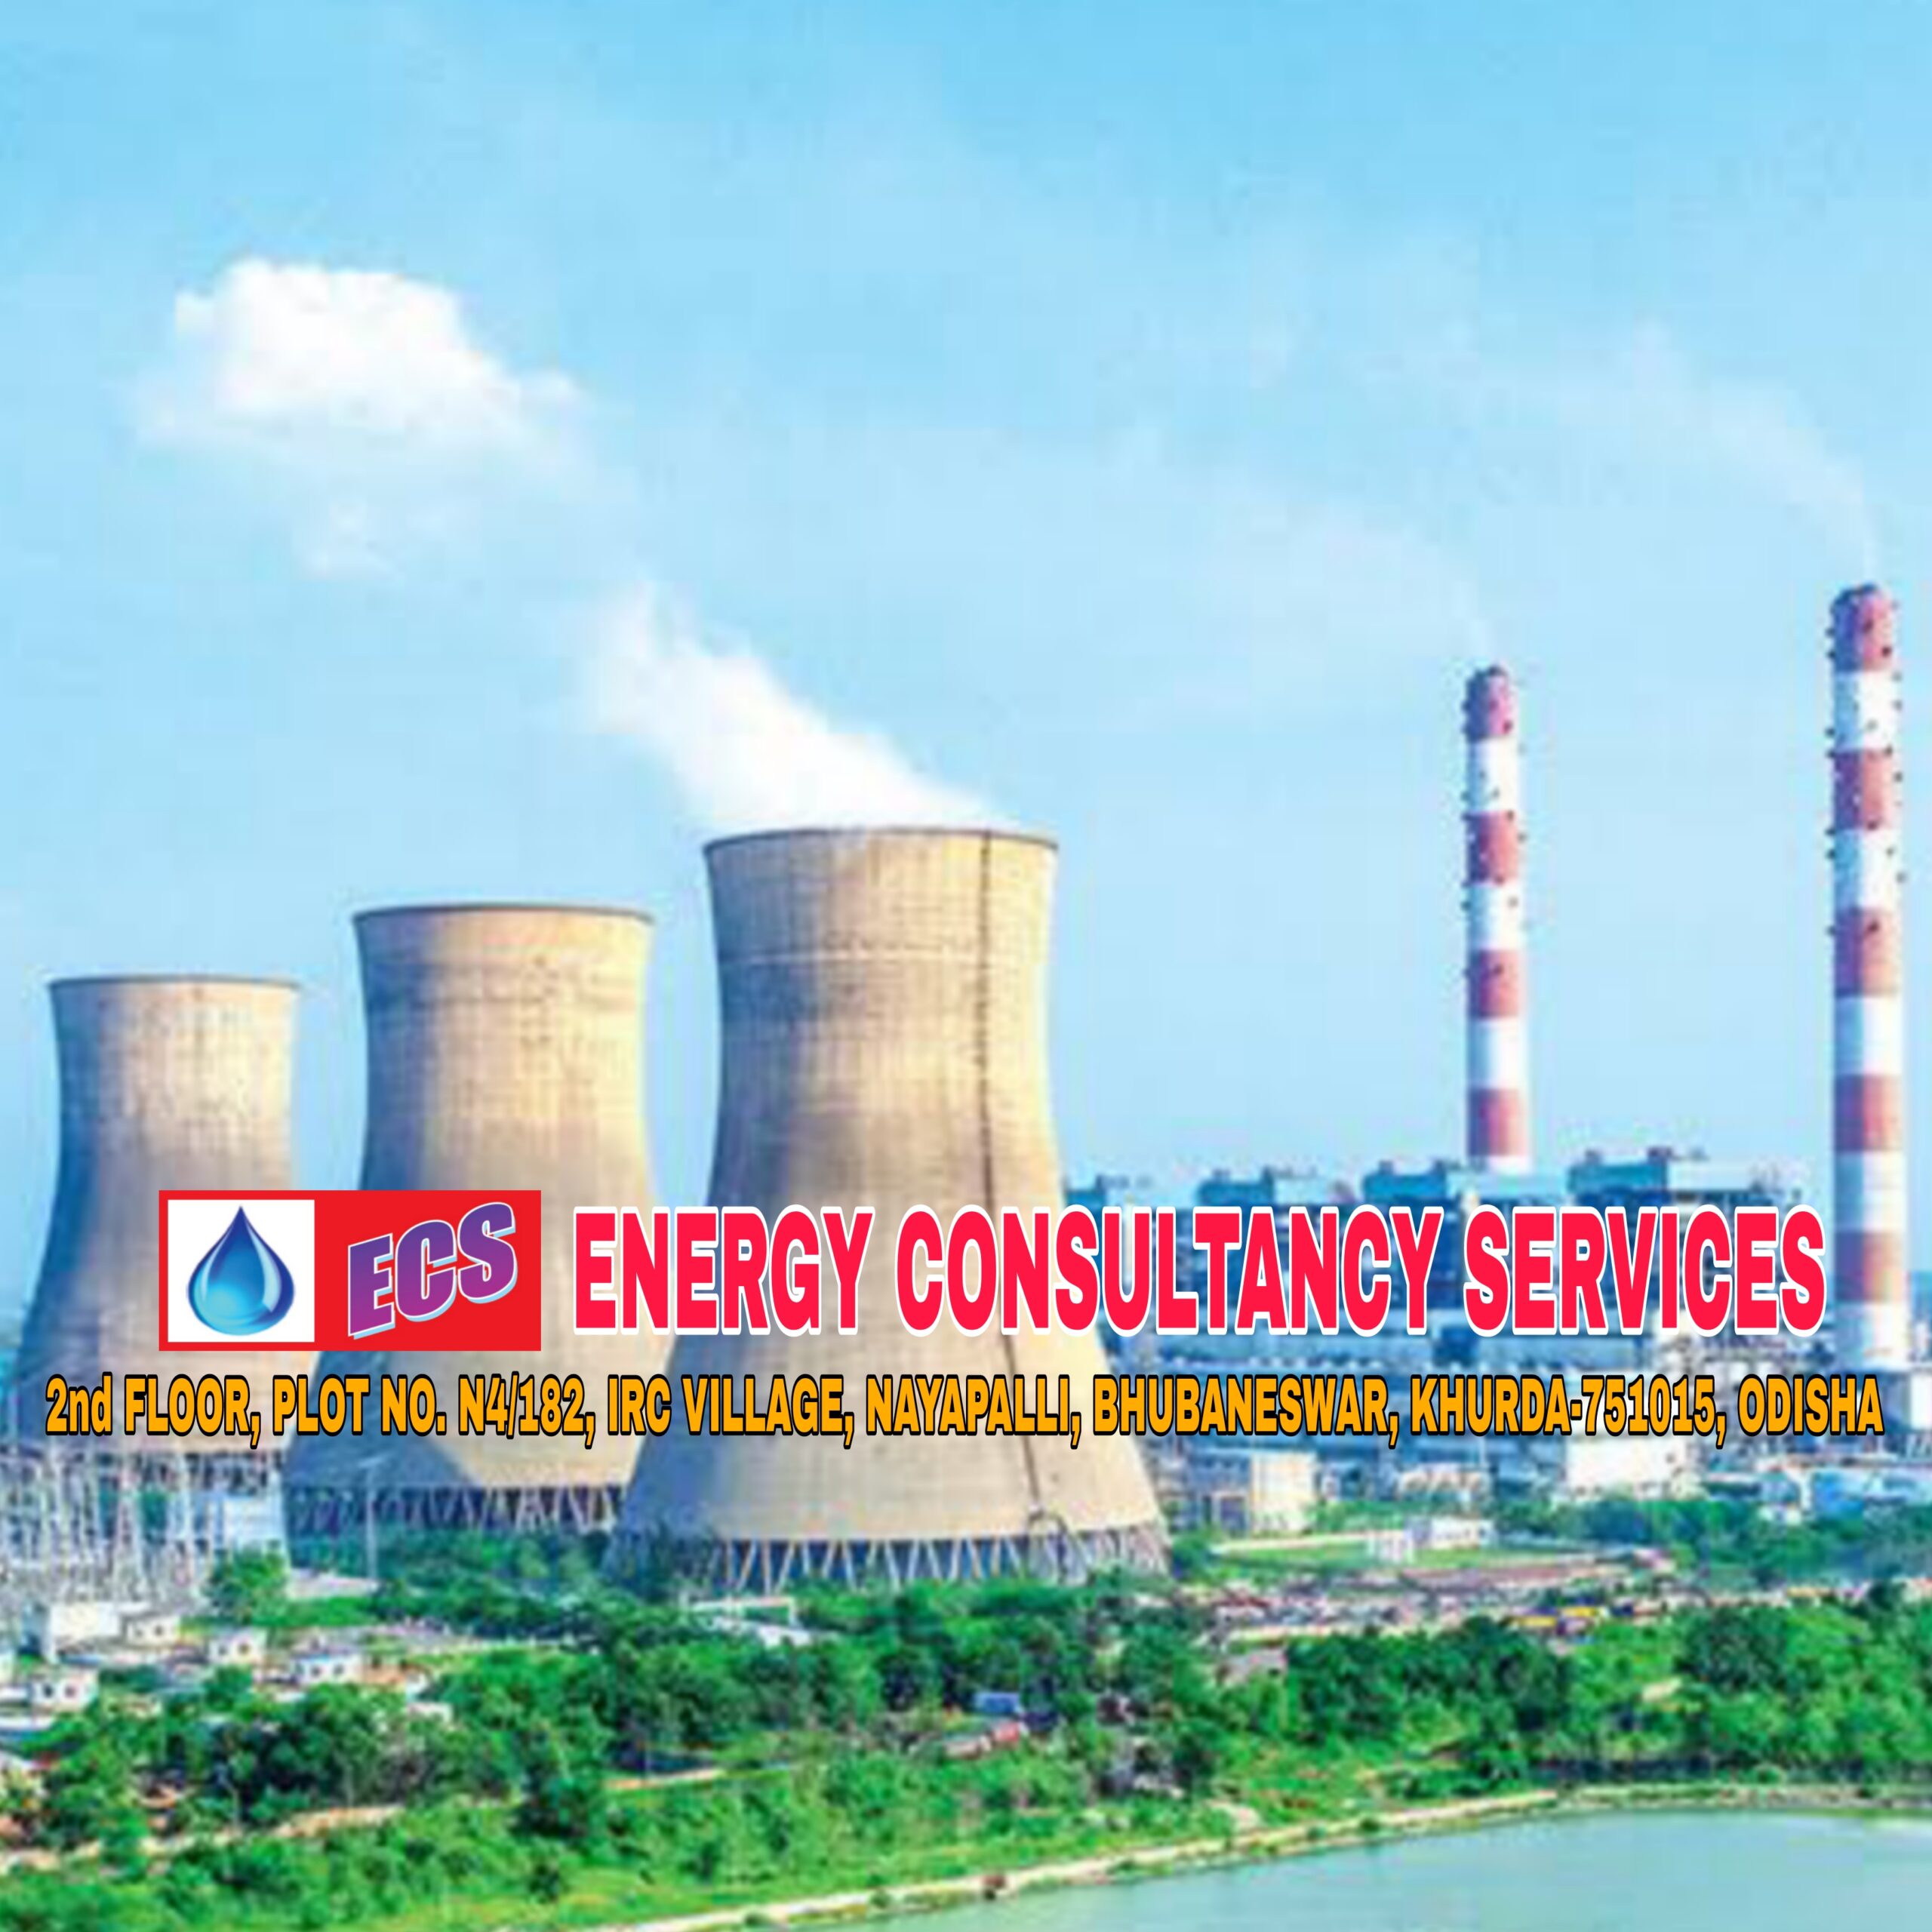 ENERGY CONSULTANCY SERVICES BHUBANESWAR